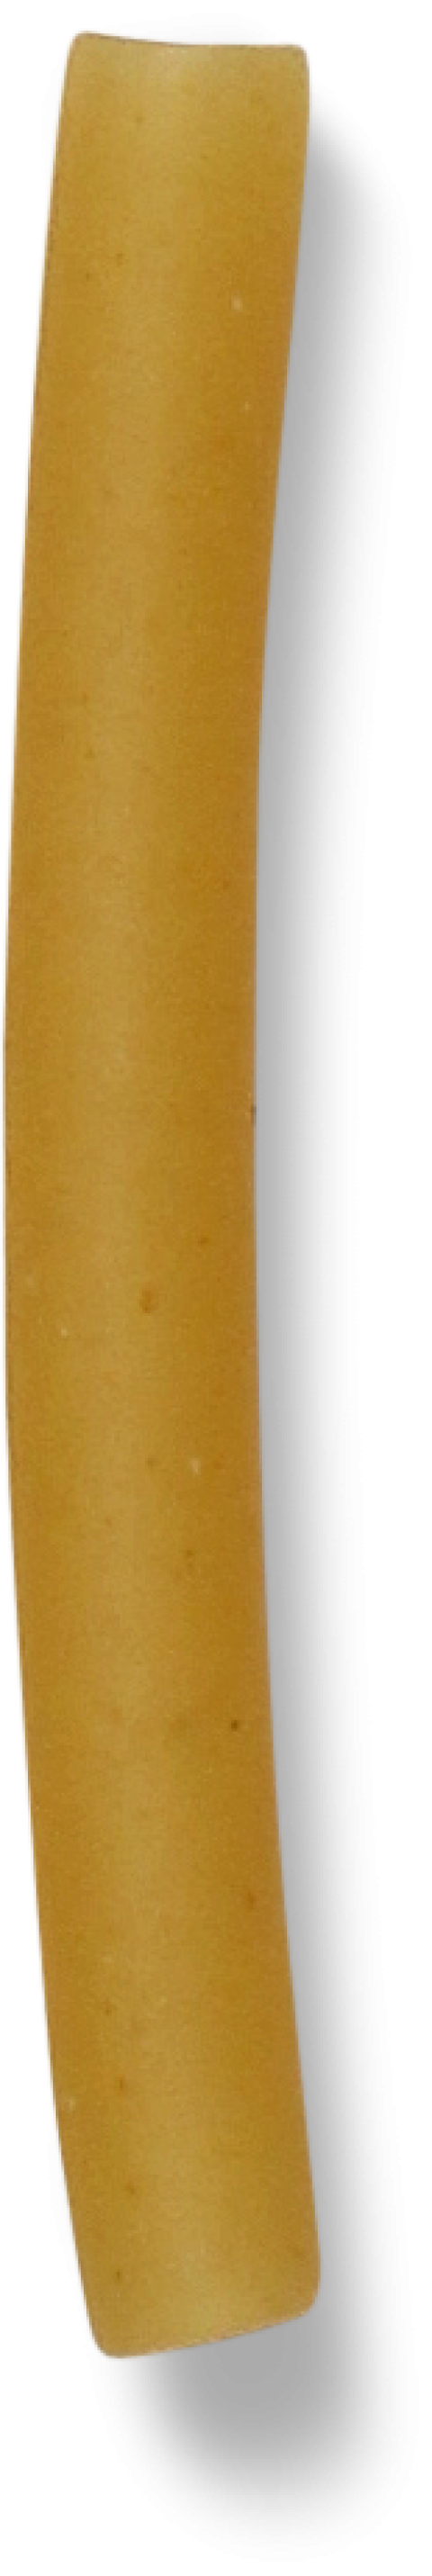 Maccharoni, Uncooked Yellow Maccharoni Pasta stick,Food Pasta HD Photo Free Download PNG Image,Transparent Background